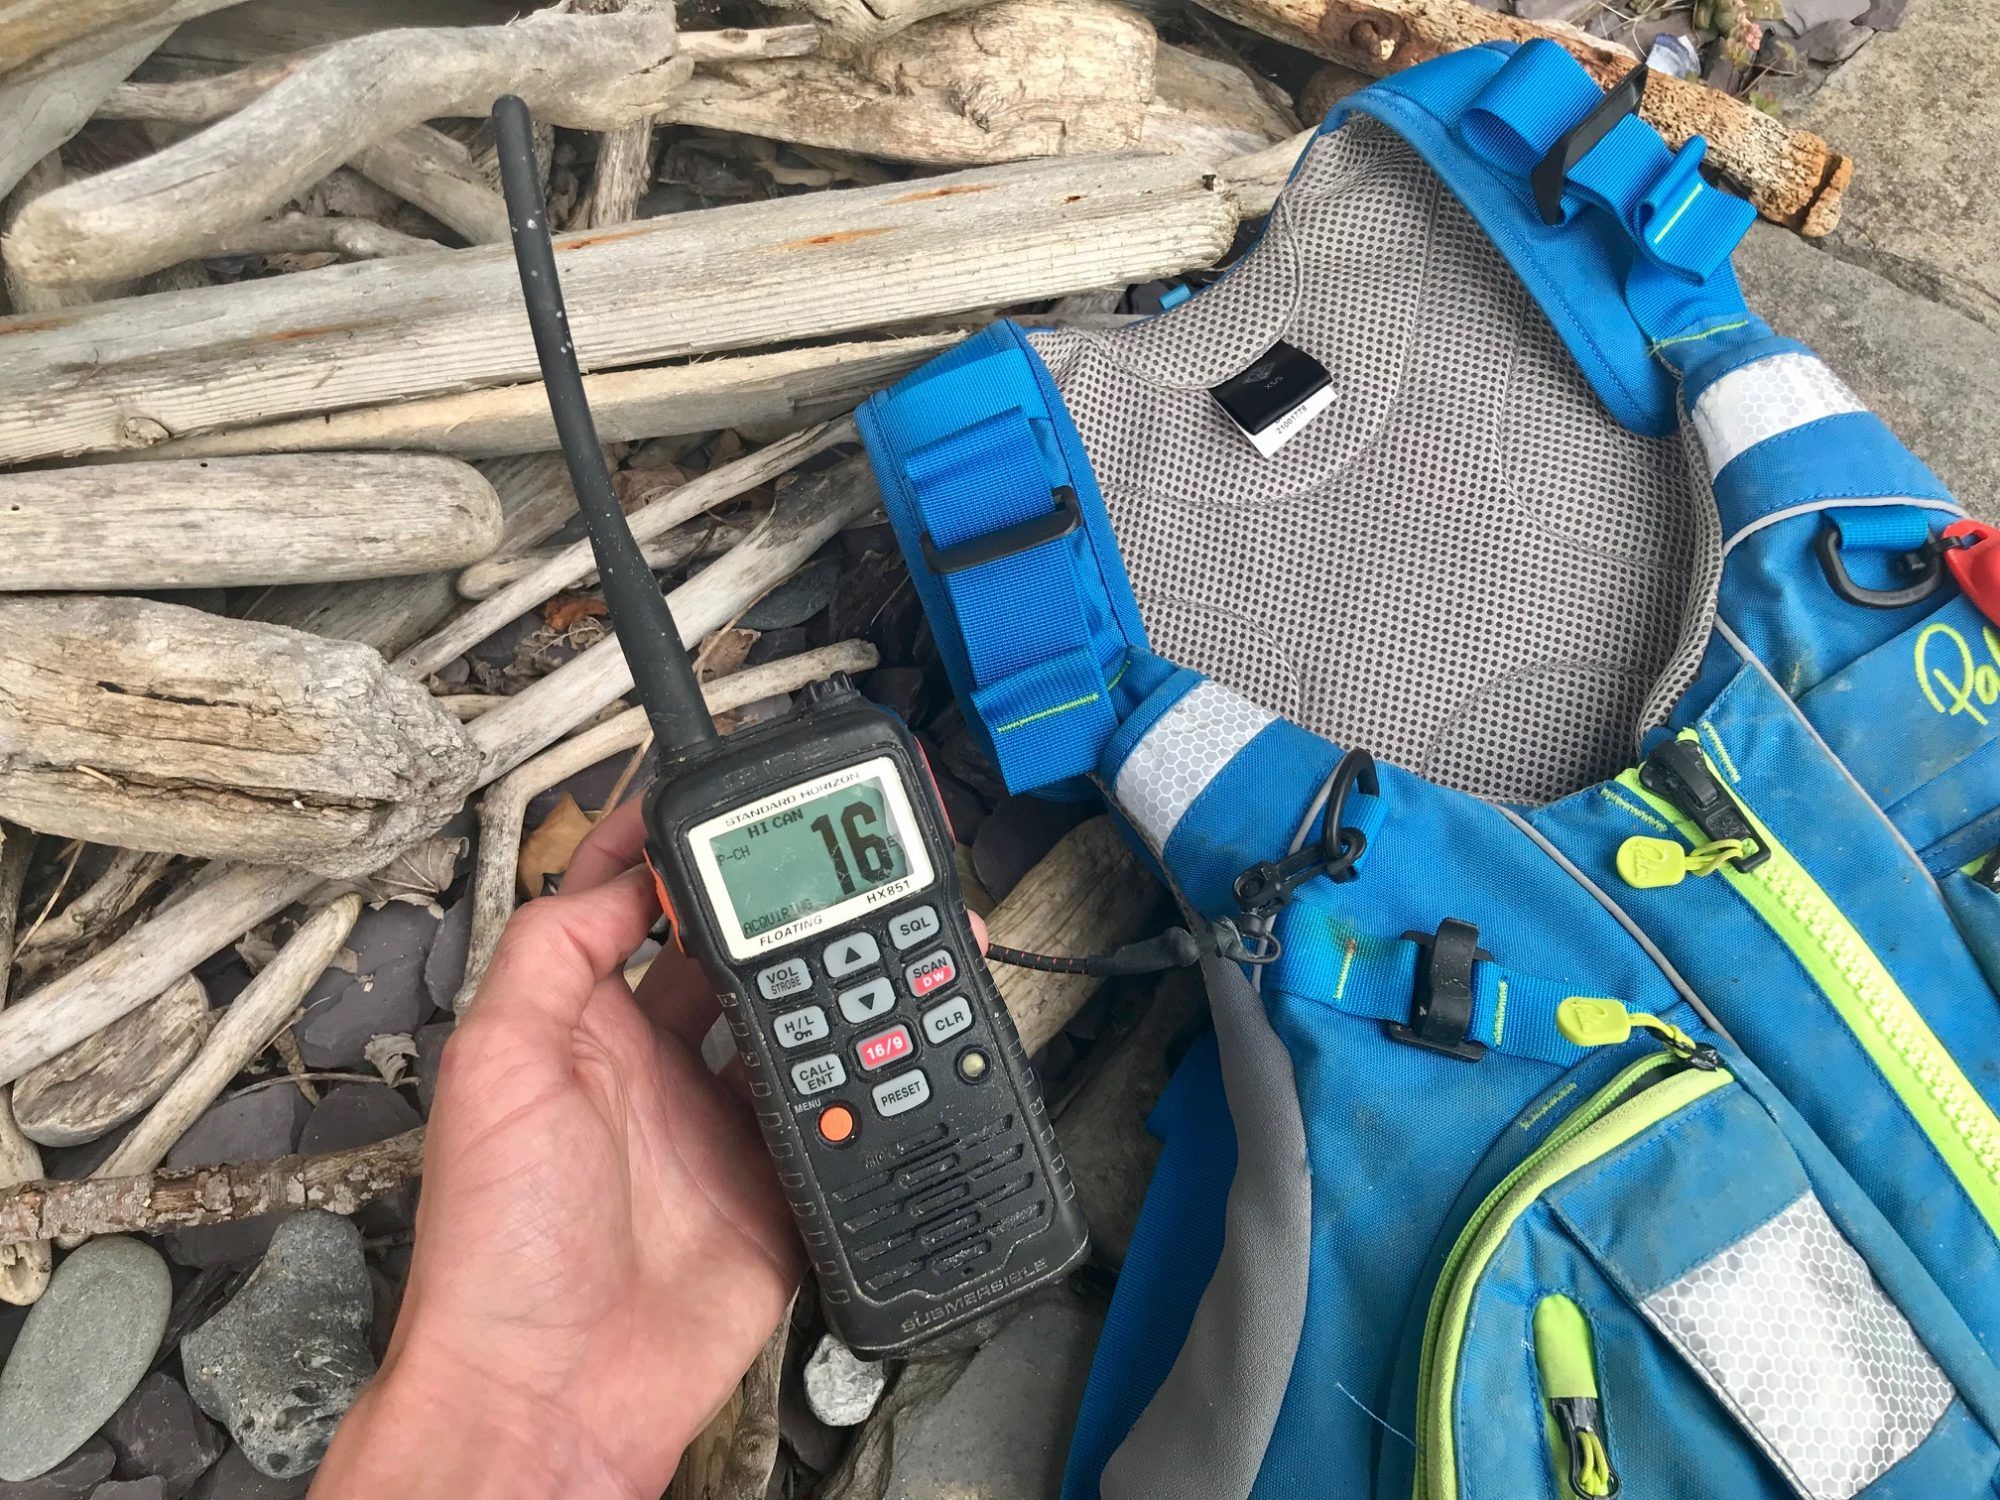 VHF Radio leashed to the Buoyancy Aid